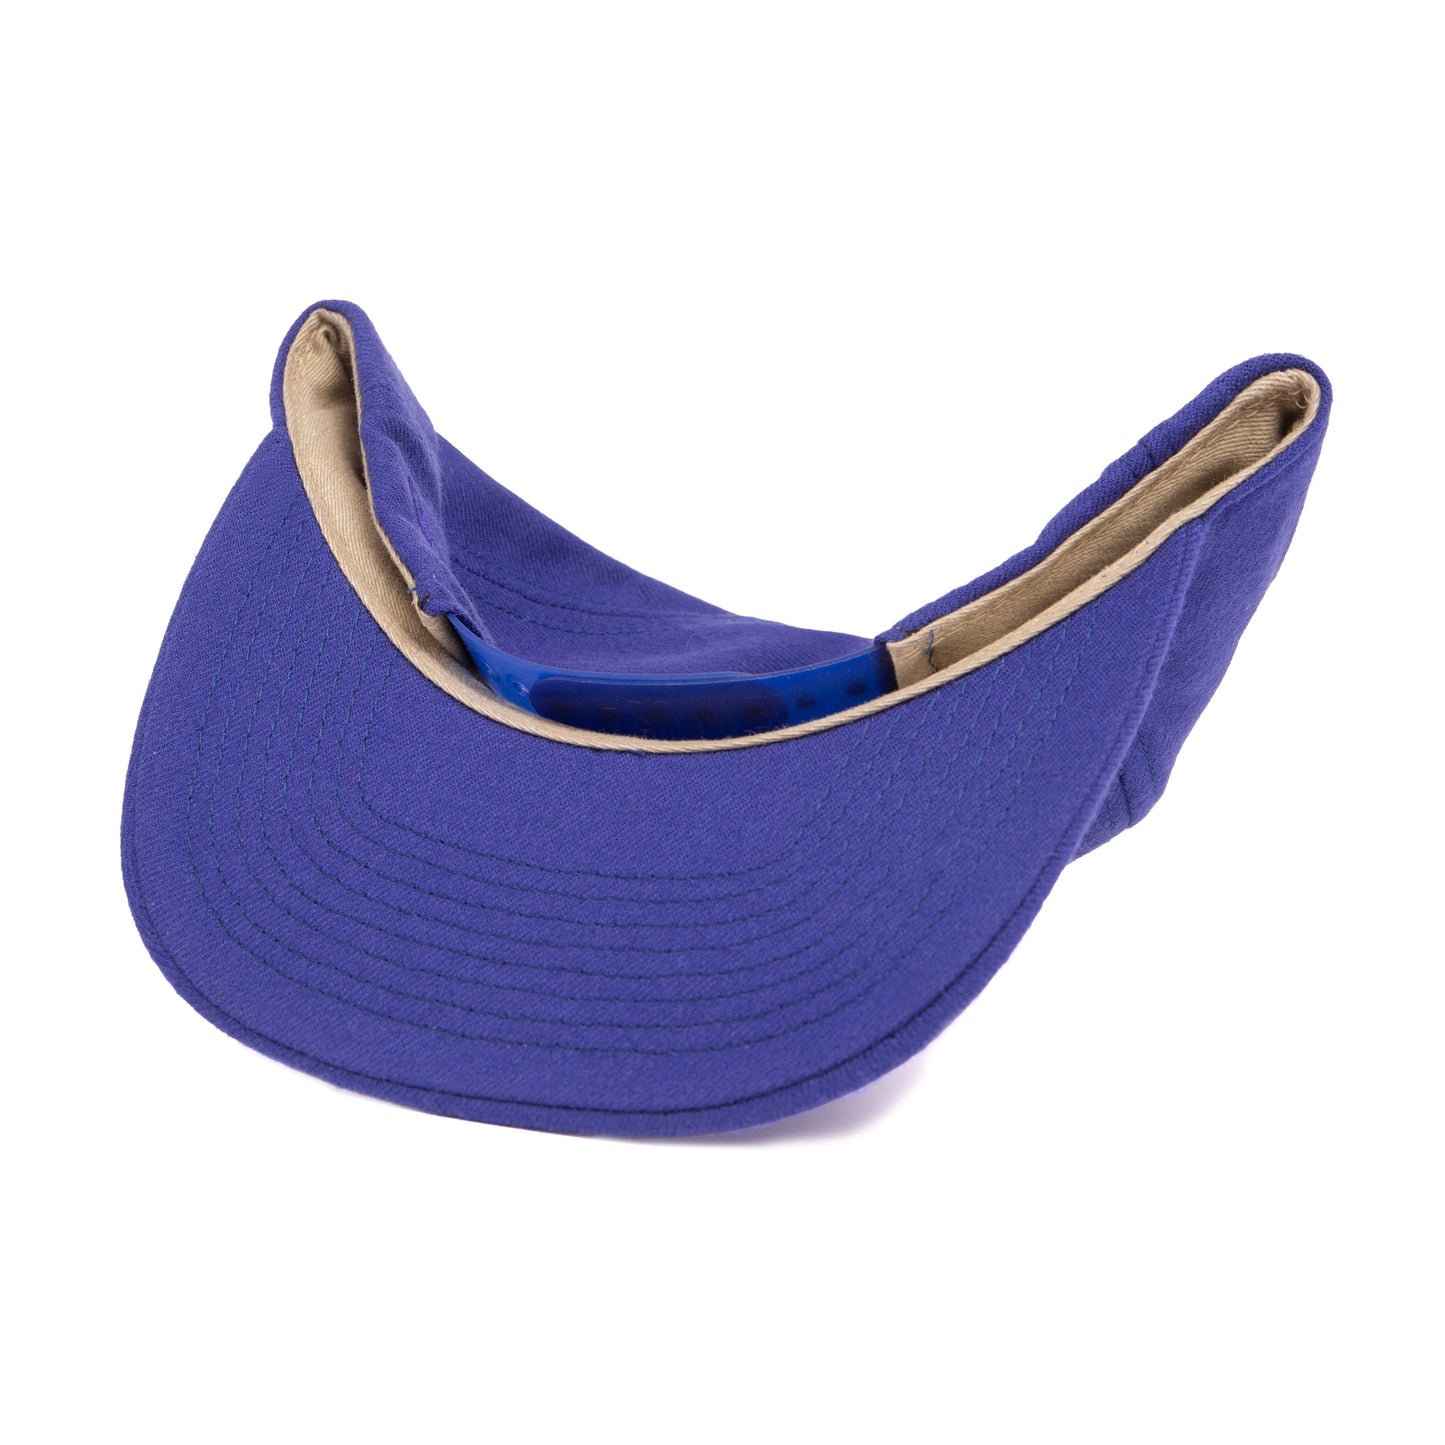 Flatbush Snapback Hat